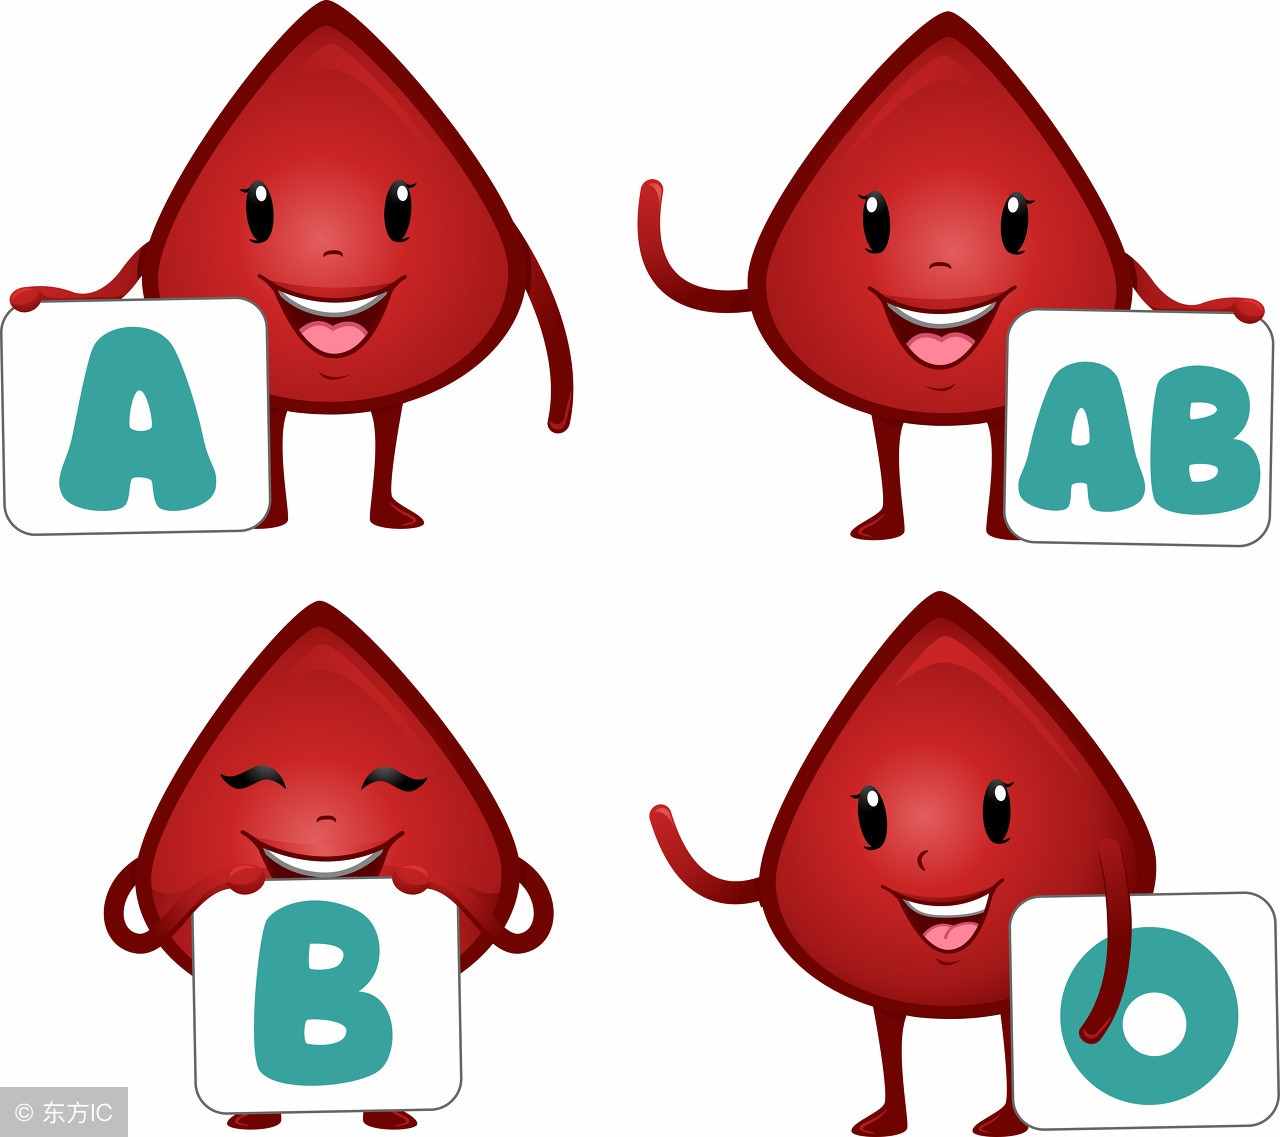 O型血的妈妈和AB型血的爸爸会生出AB型的孩子吗？